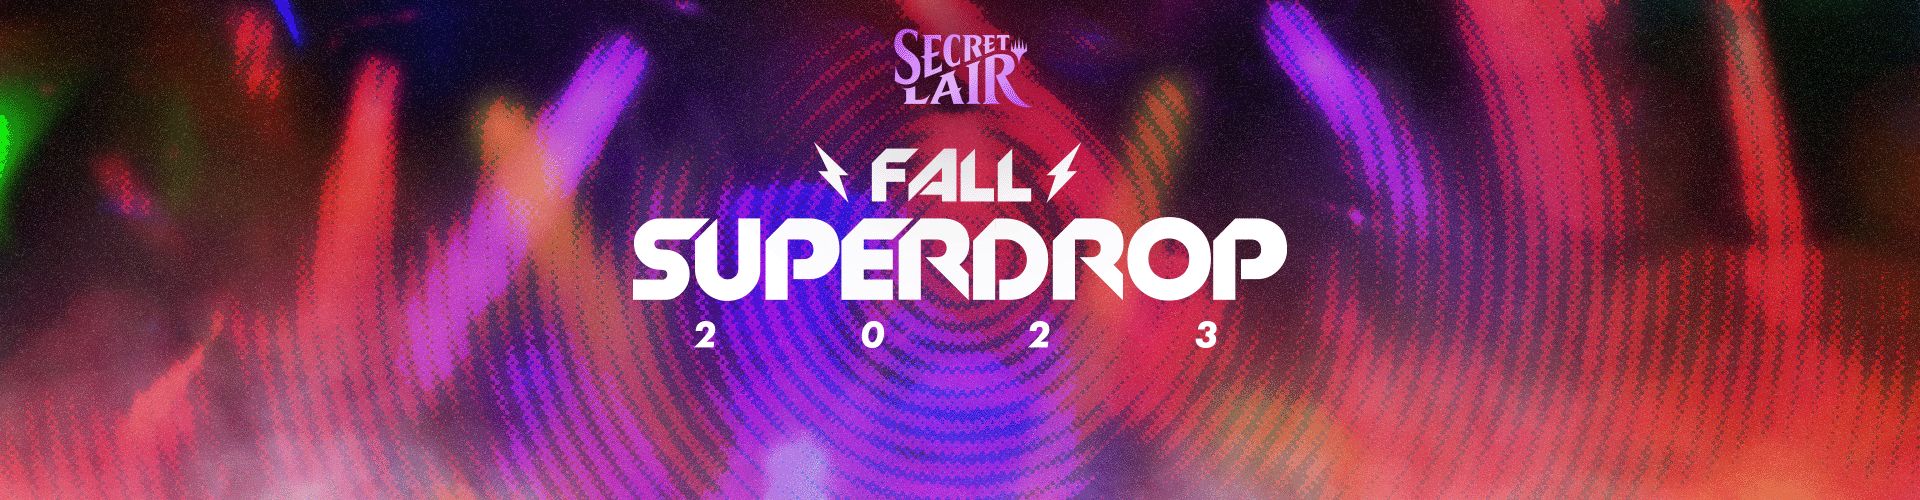 Fall Superdrop 2023 Secret Lair